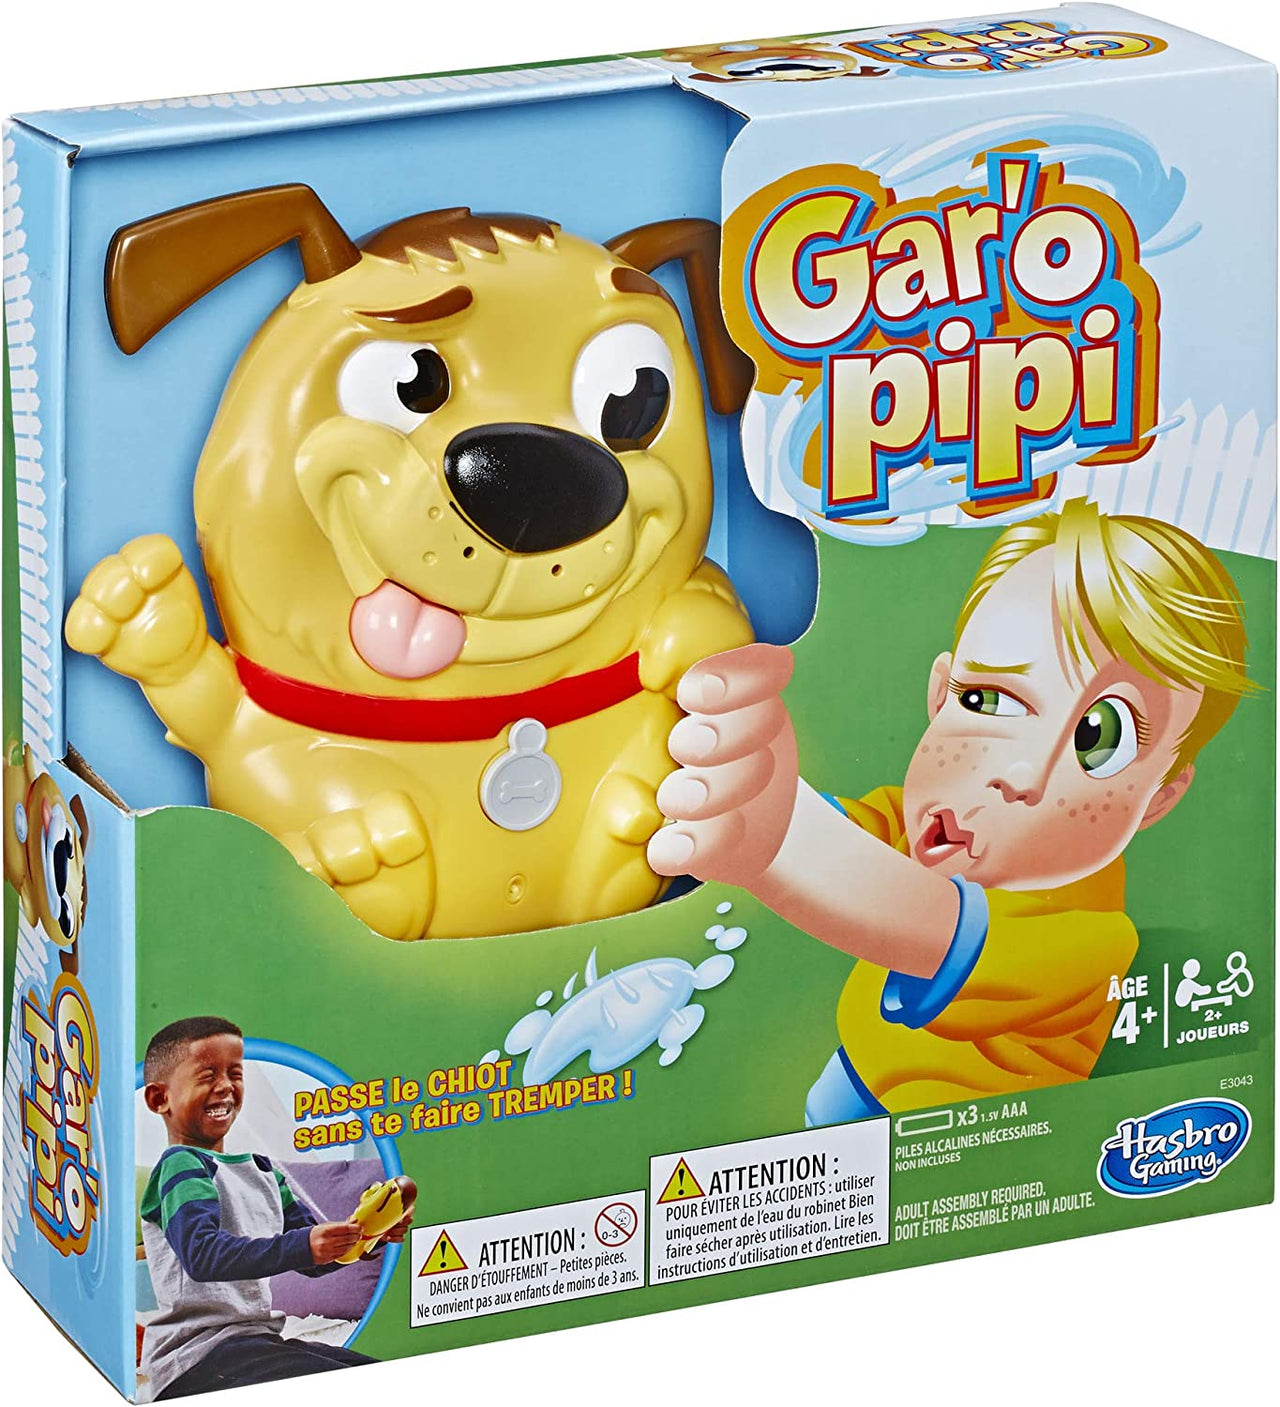 Gar'O Pipi – Fun Game for Children